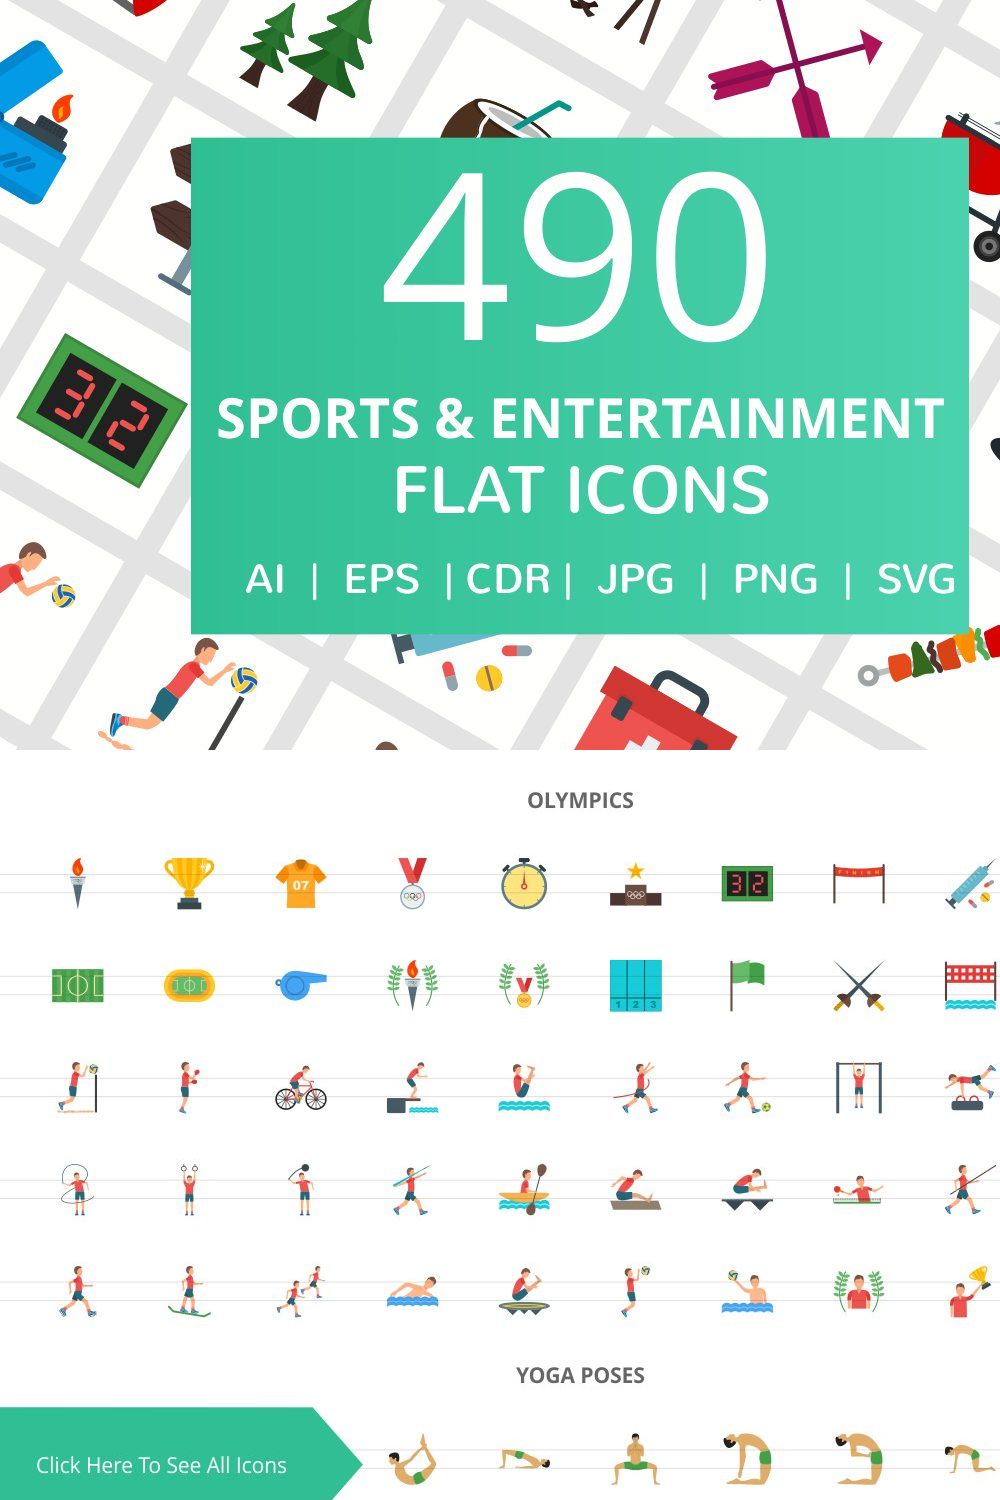 490 Sports & Entertainment Flat Icon pinterest preview image.